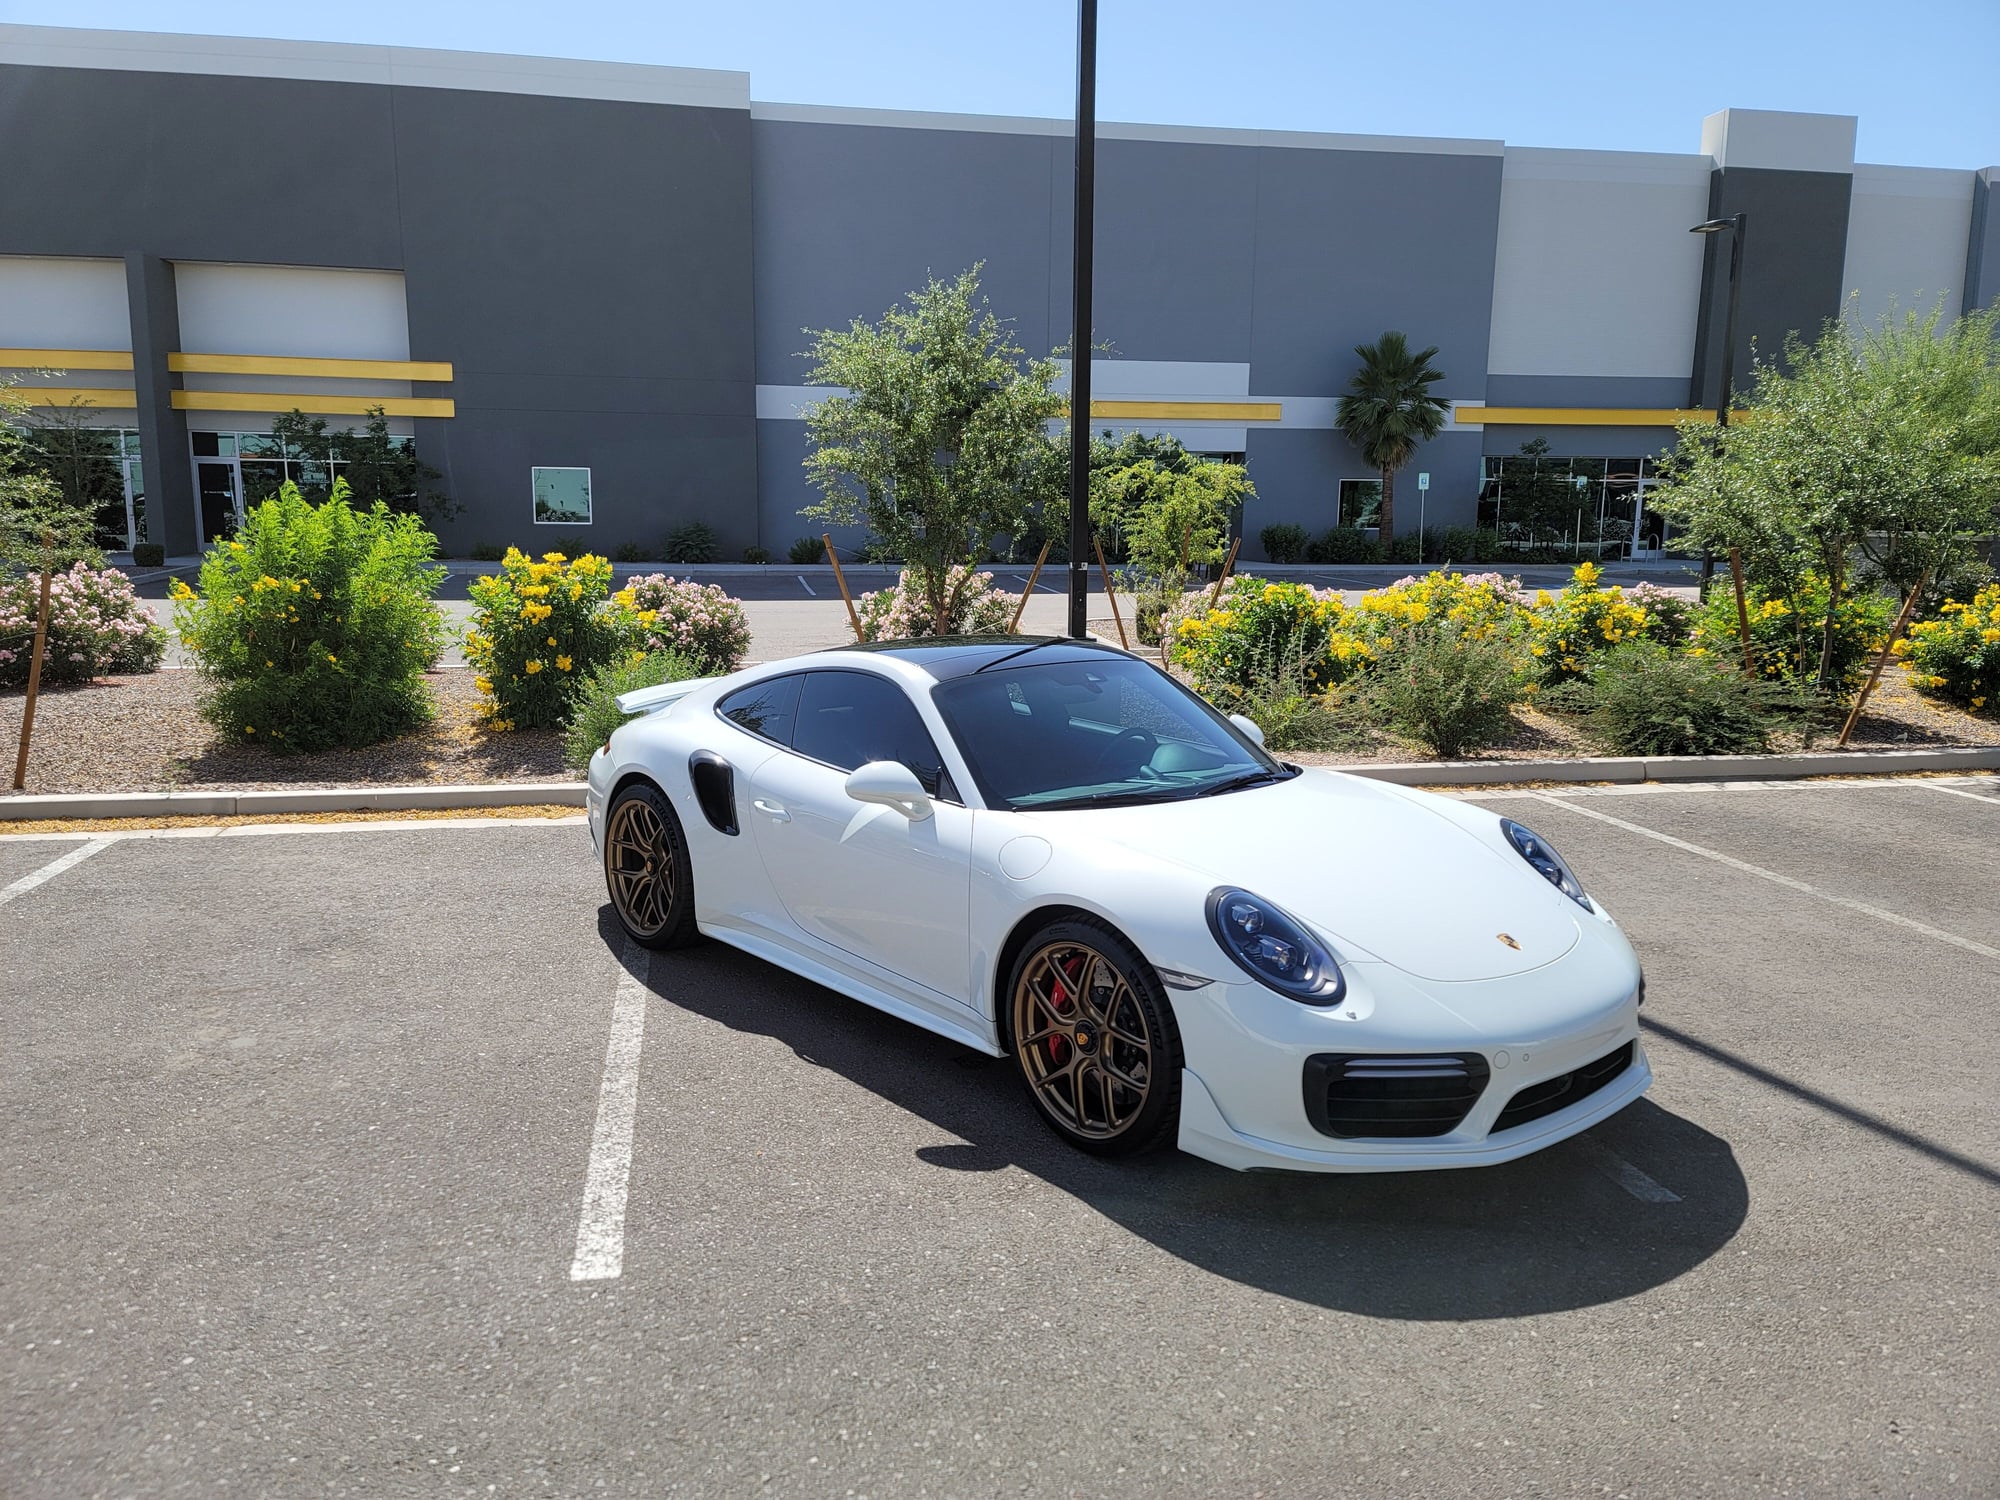 2018 Porsche 911 - 2018 991.2 Turbo S. White/Bordeaux, Huge MSRP, CPO Until Dec. 2023, $35k+ in Extras! - Used - VIN WP0AD2A97JS156284 - 38,000 Miles - AWD - Automatic - Coupe - White - Phoenix, AZ 85021, United States